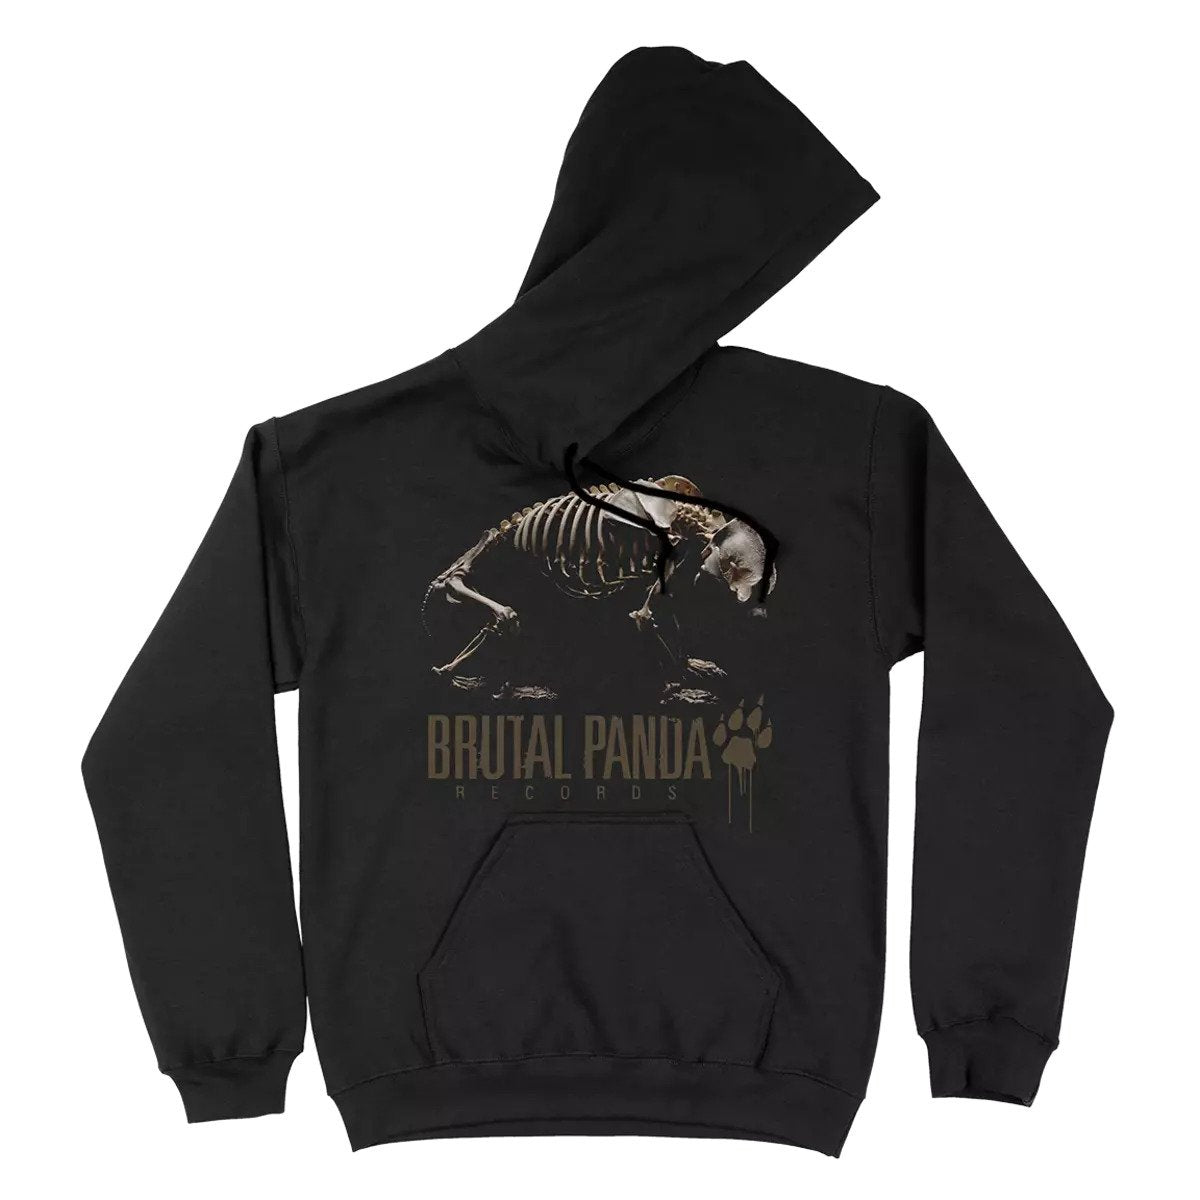 Brutal Panda Records - Panda Skeleton Hooded Sweatshirt (Designed by Jacob Bannon)